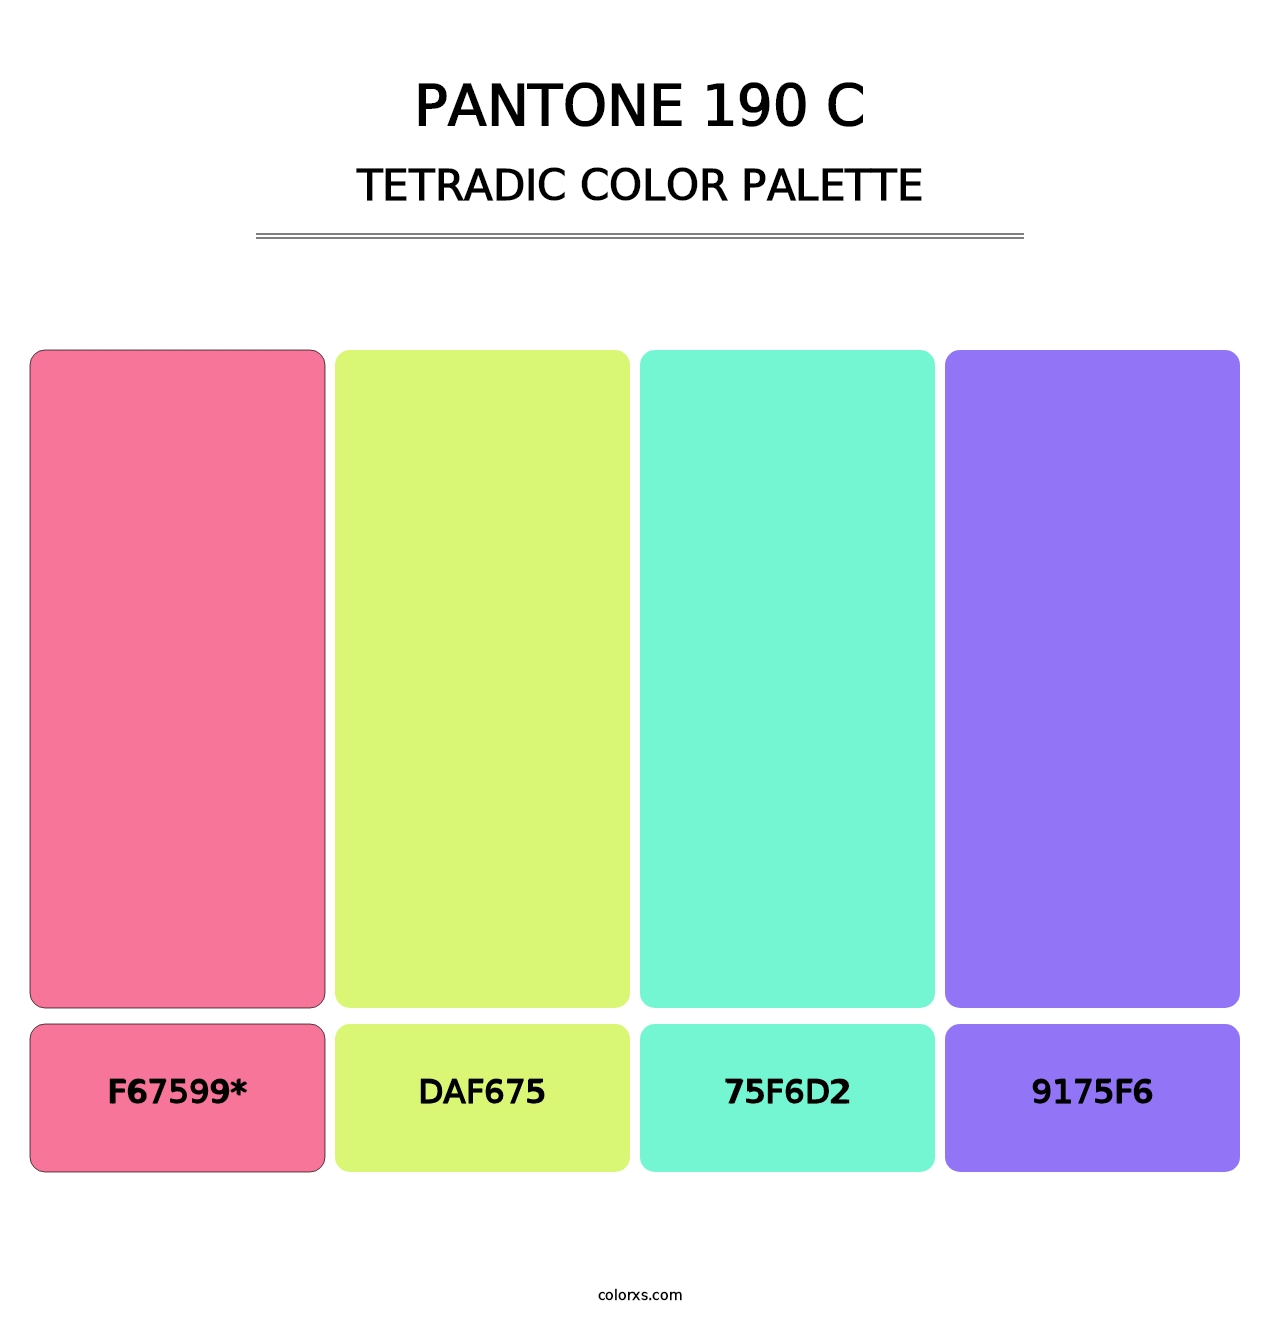 PANTONE 190 C - Tetradic Color Palette